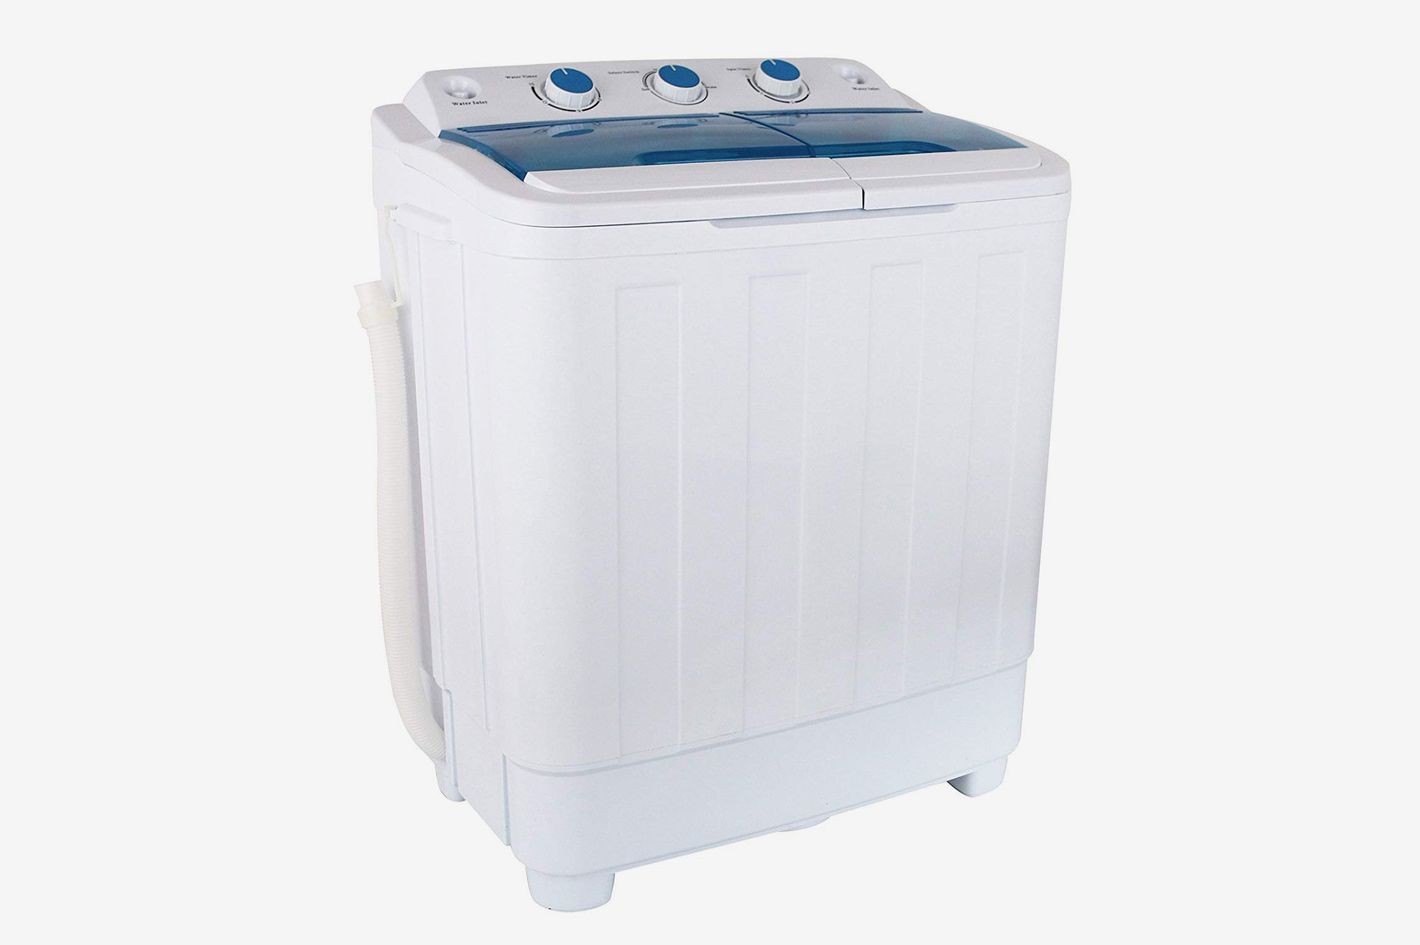 washing machines under 200 pounds